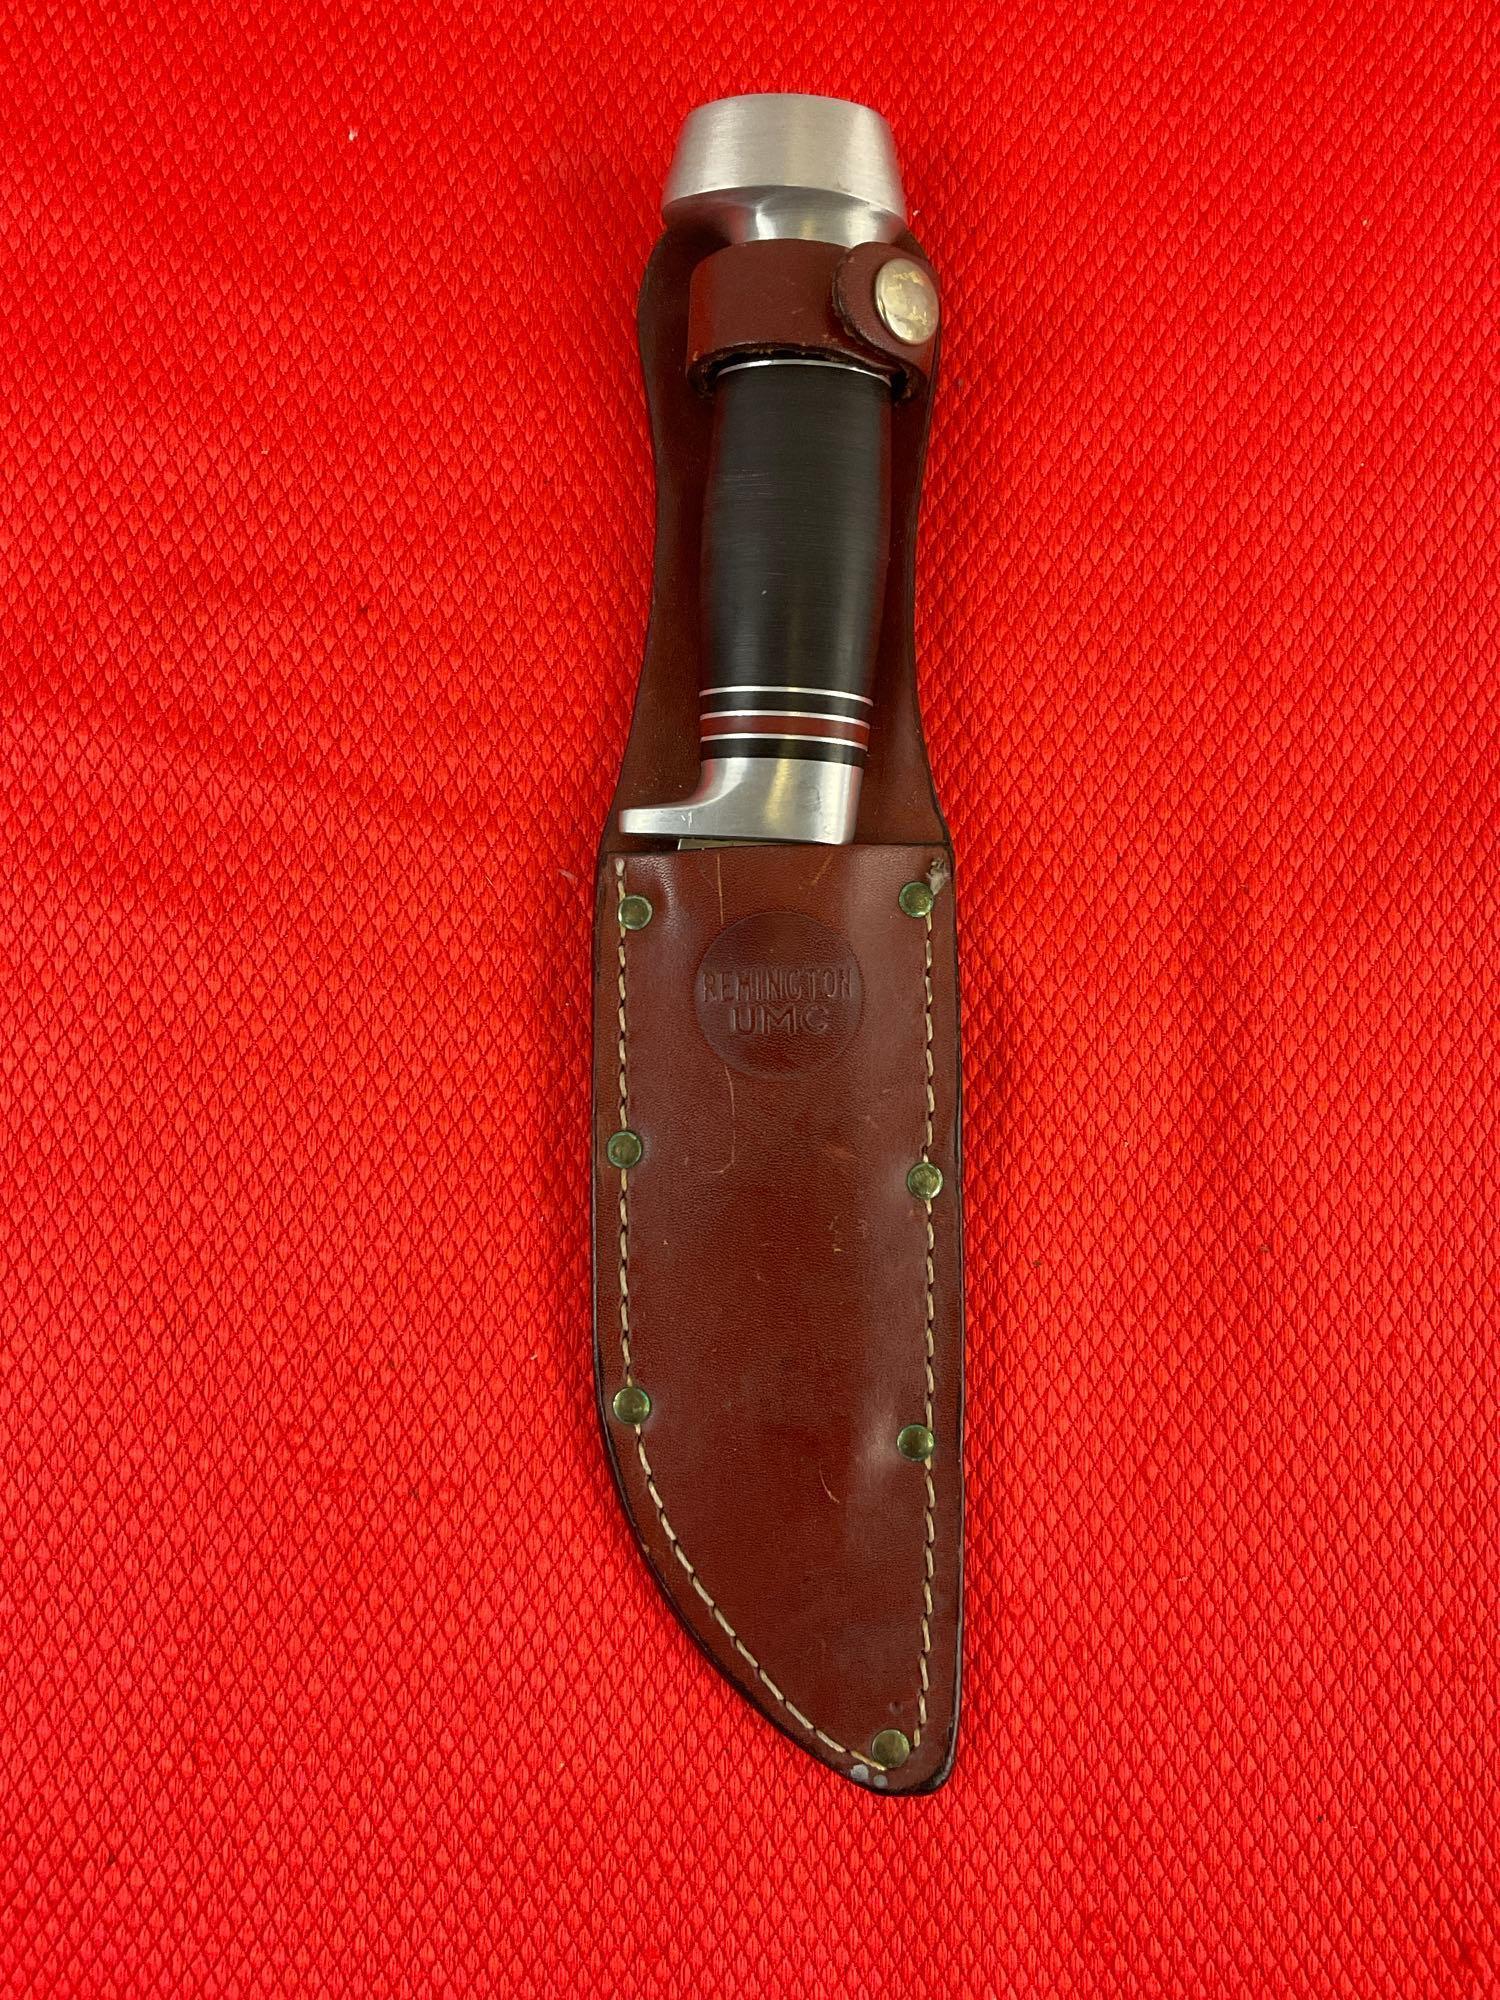 Vintage Remington UMC RH-50 4.25" Fixed Blade Stainless Steel Skinning Knife w/ Leather Sheath. See